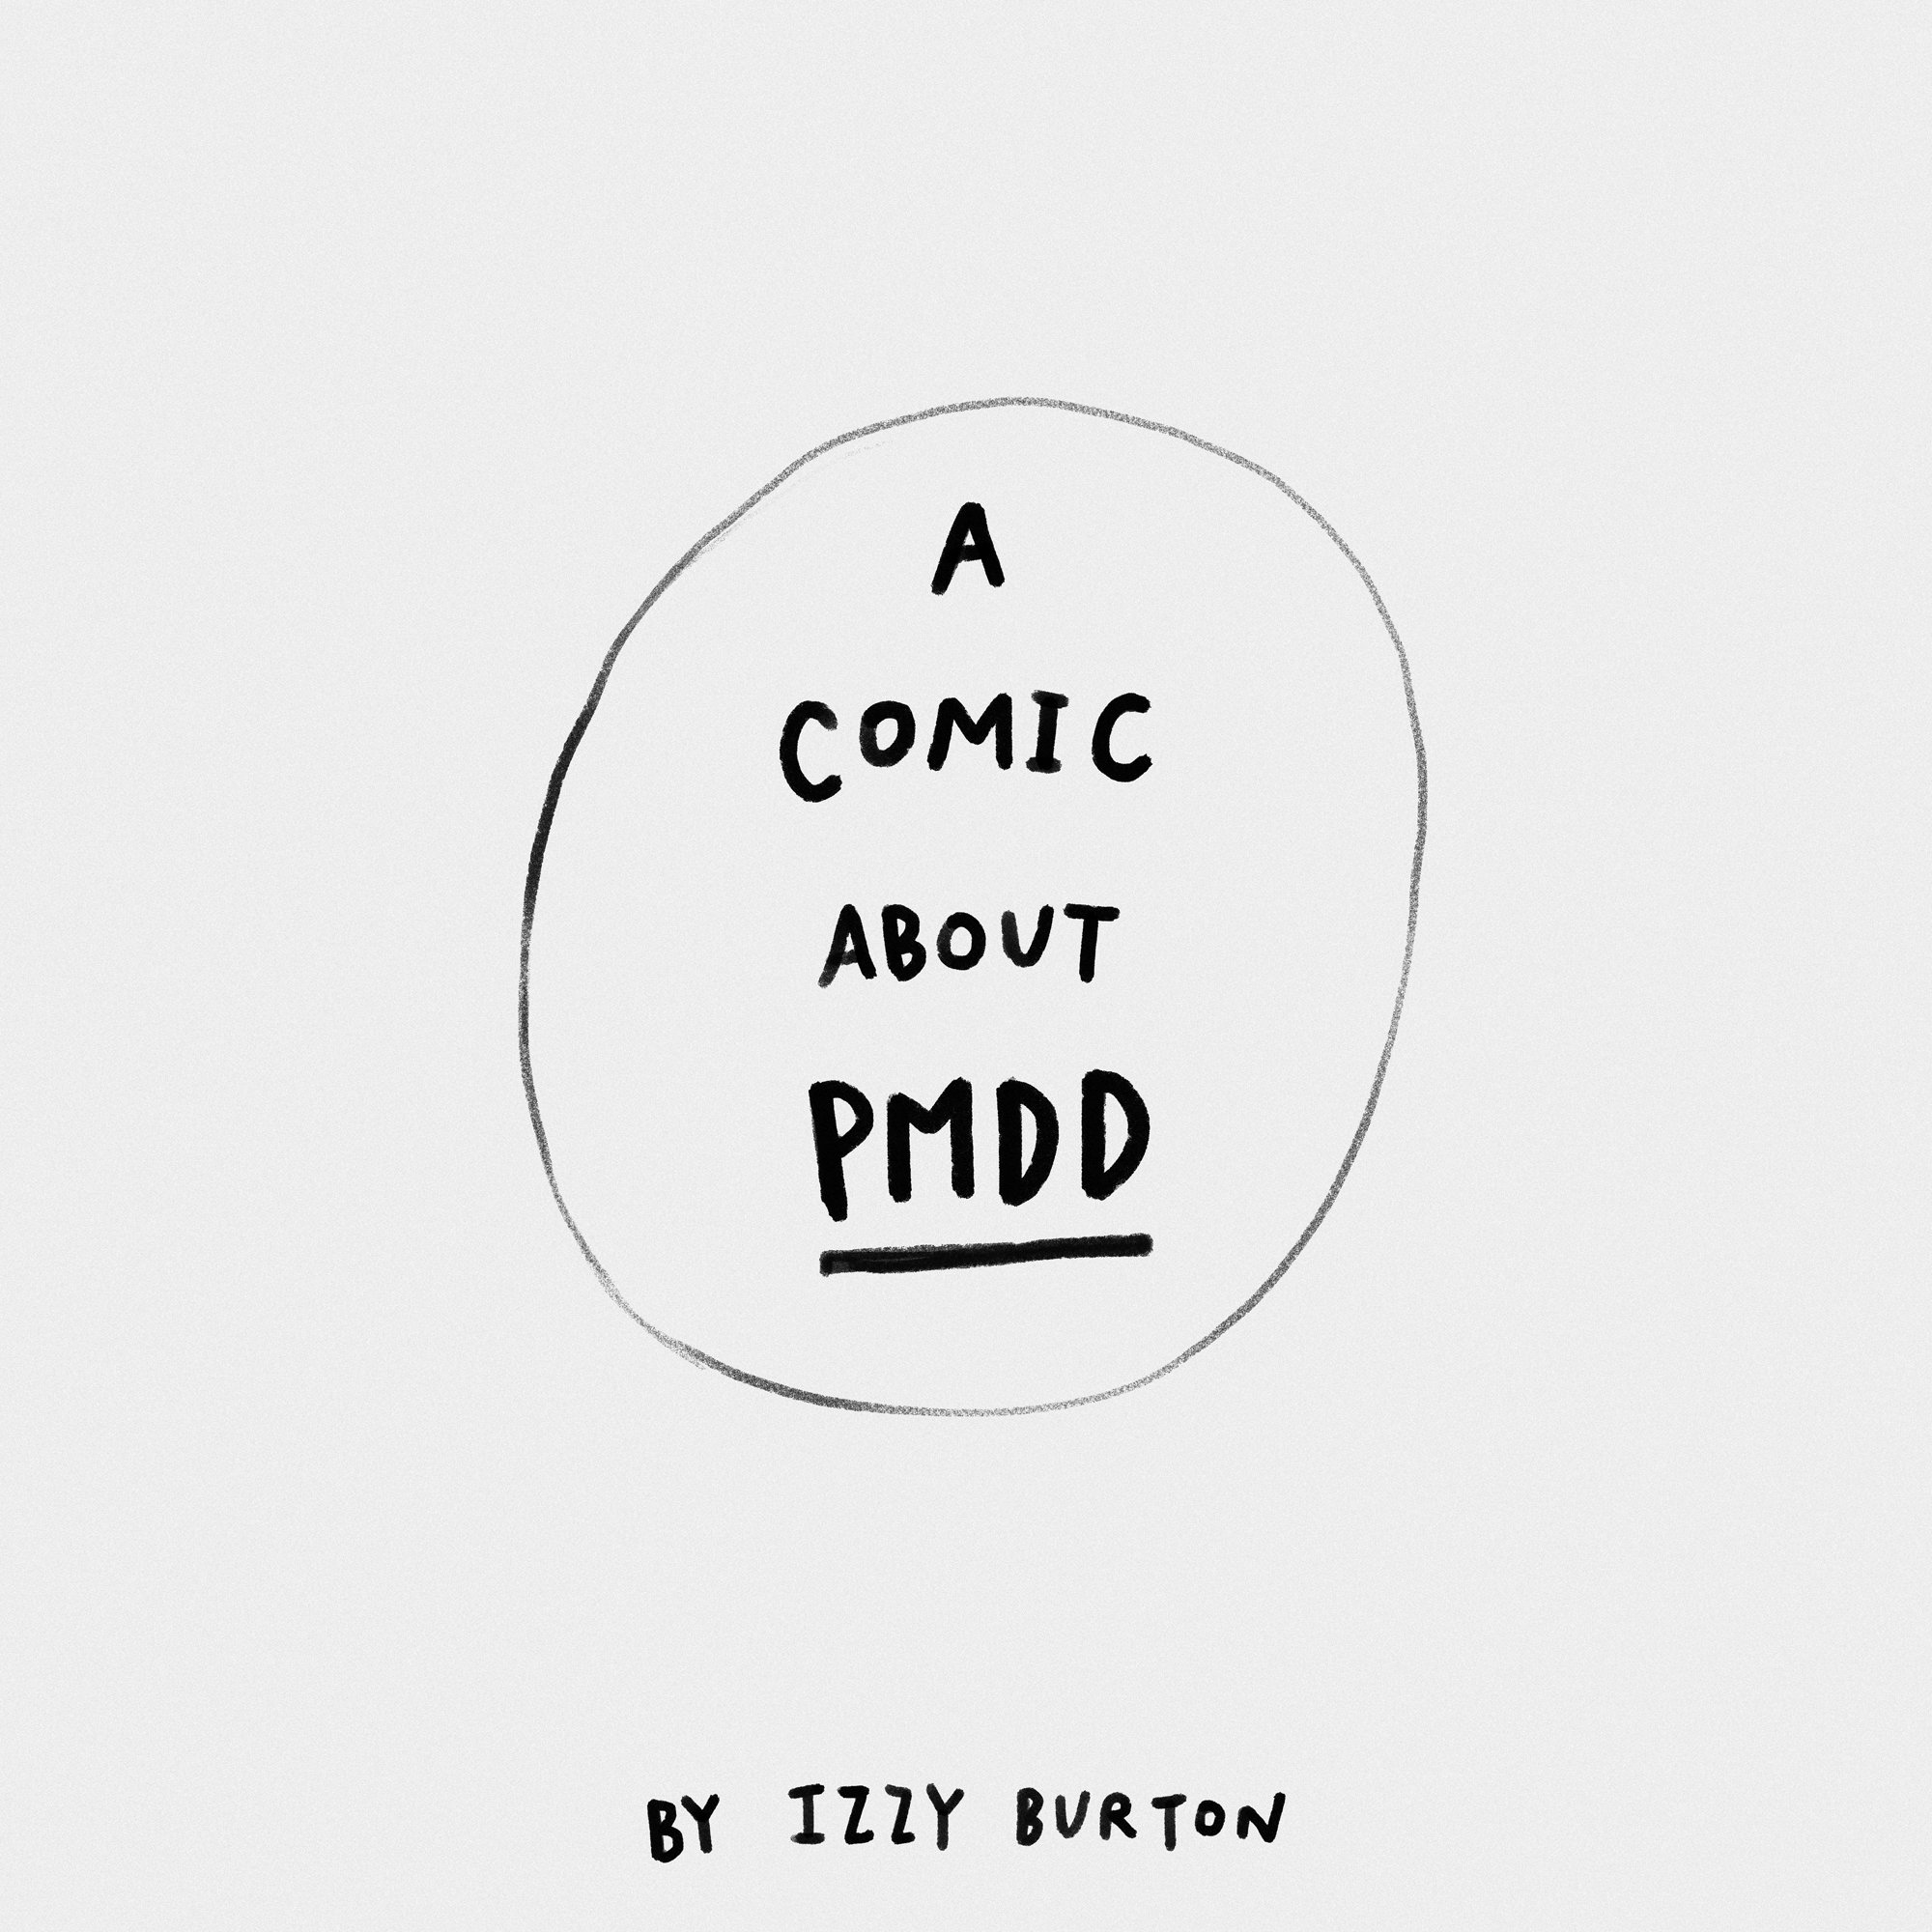 PMDD comic_00.jpg